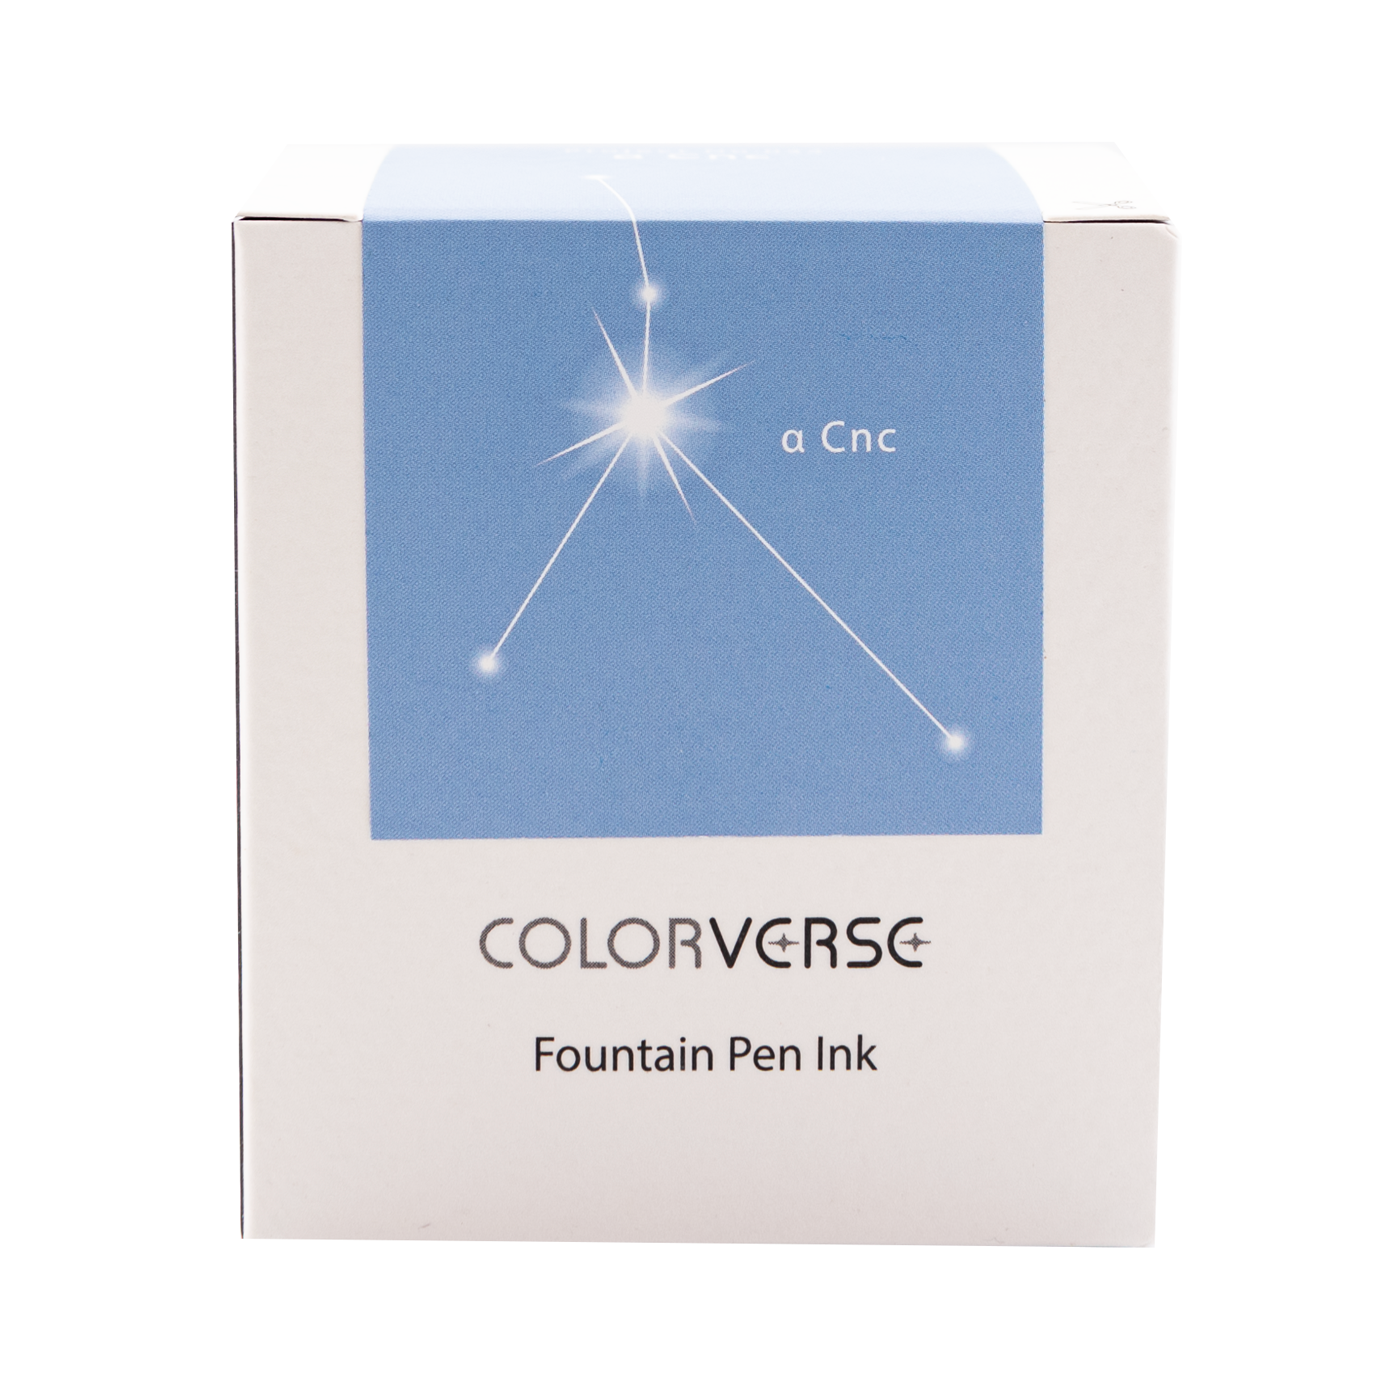 Colorverse Project Vol. 5  Constellation II. 034 - a Cnc